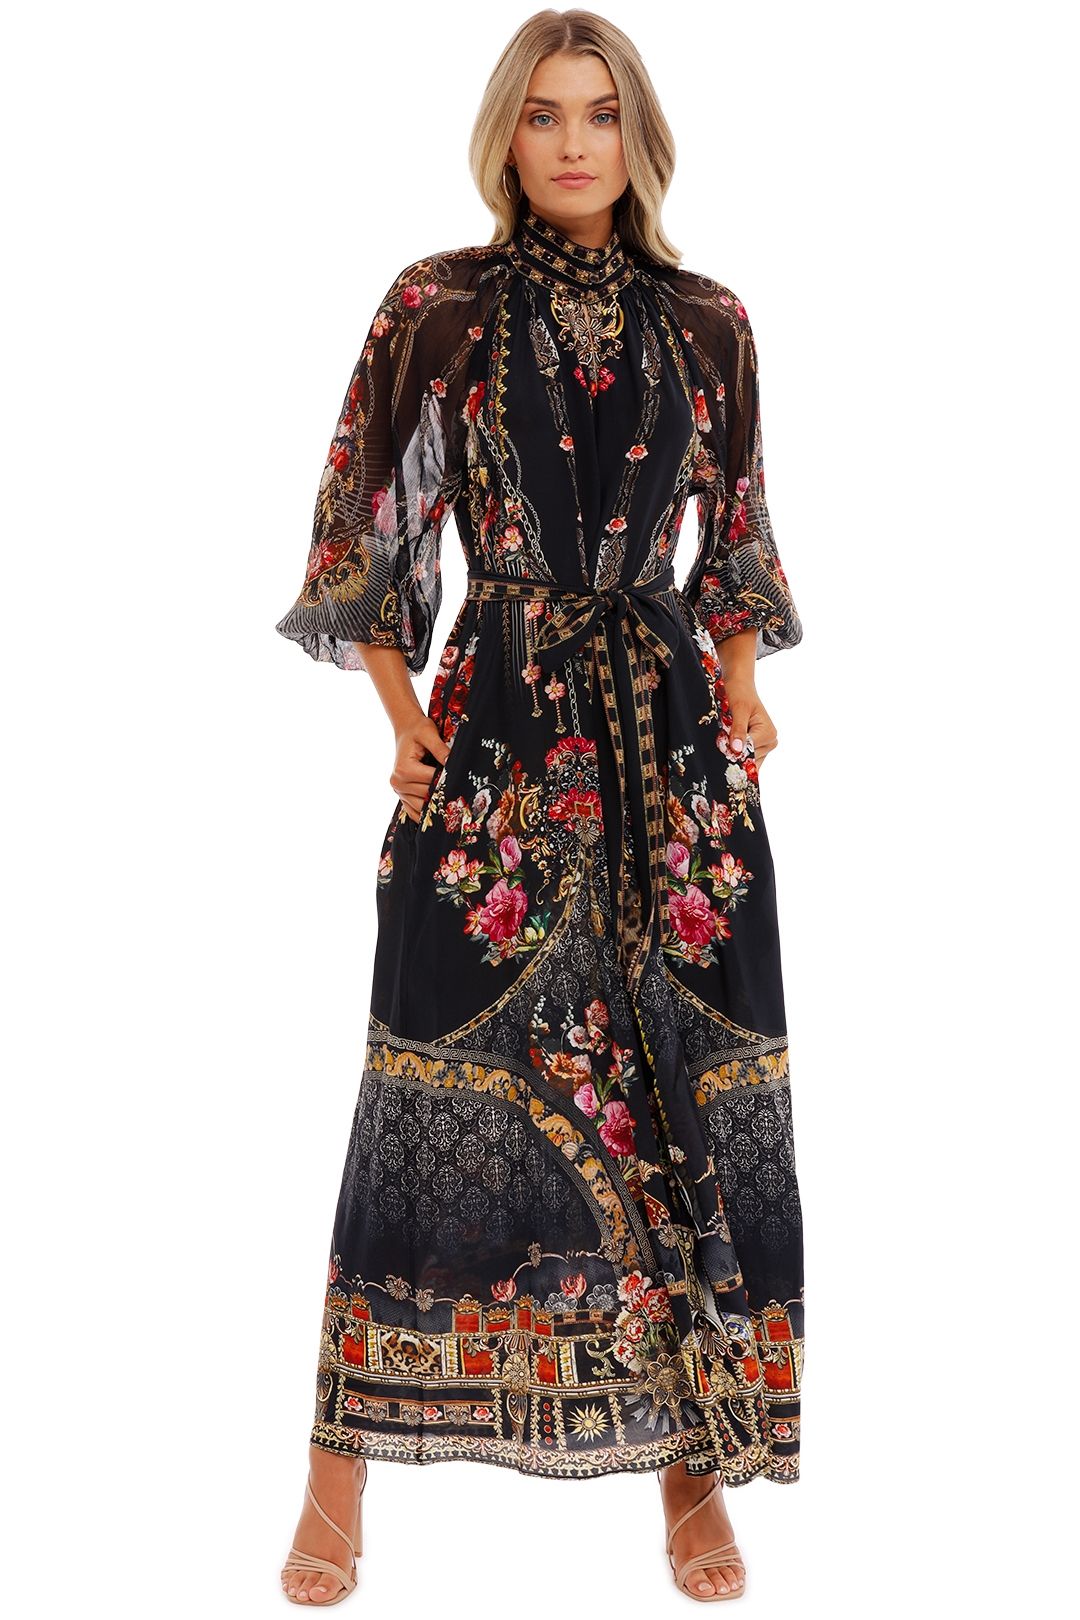 Hire Raglan Shirt Dress in Gothic Goddess | Camilla | GlamCorner